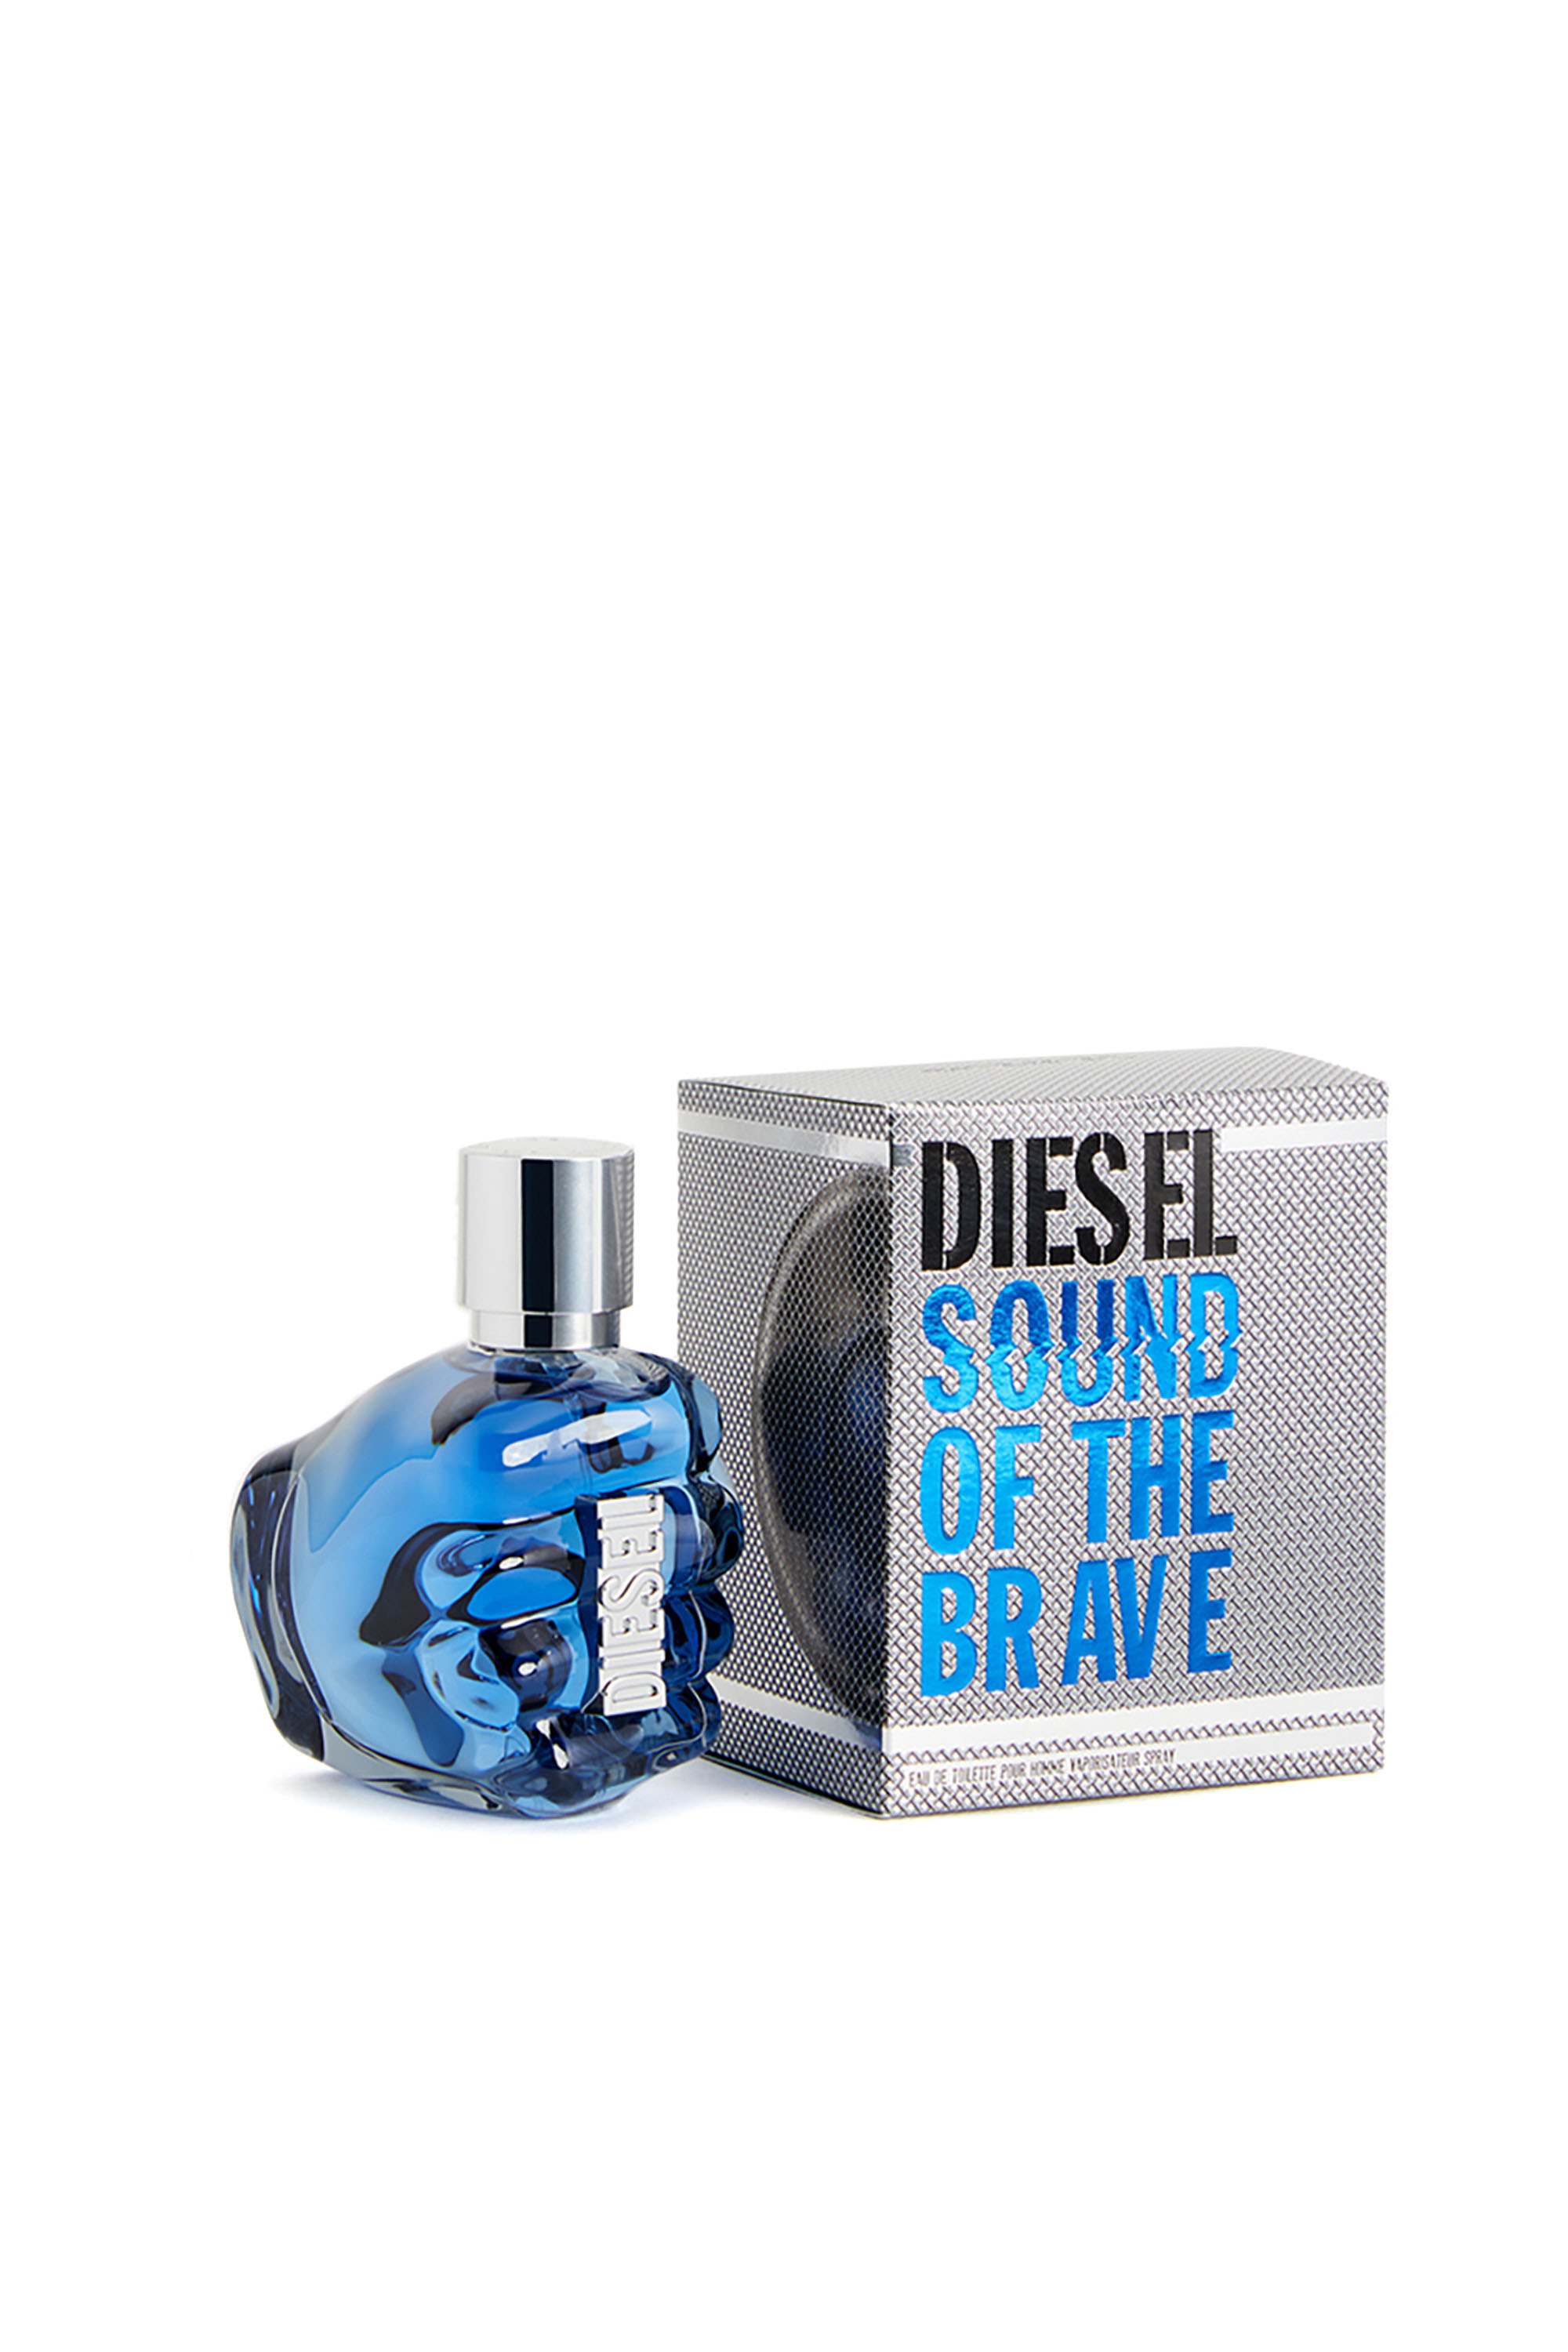 Diesel - SOUND OF THE BRAVE 35ML, Blue - Image 2